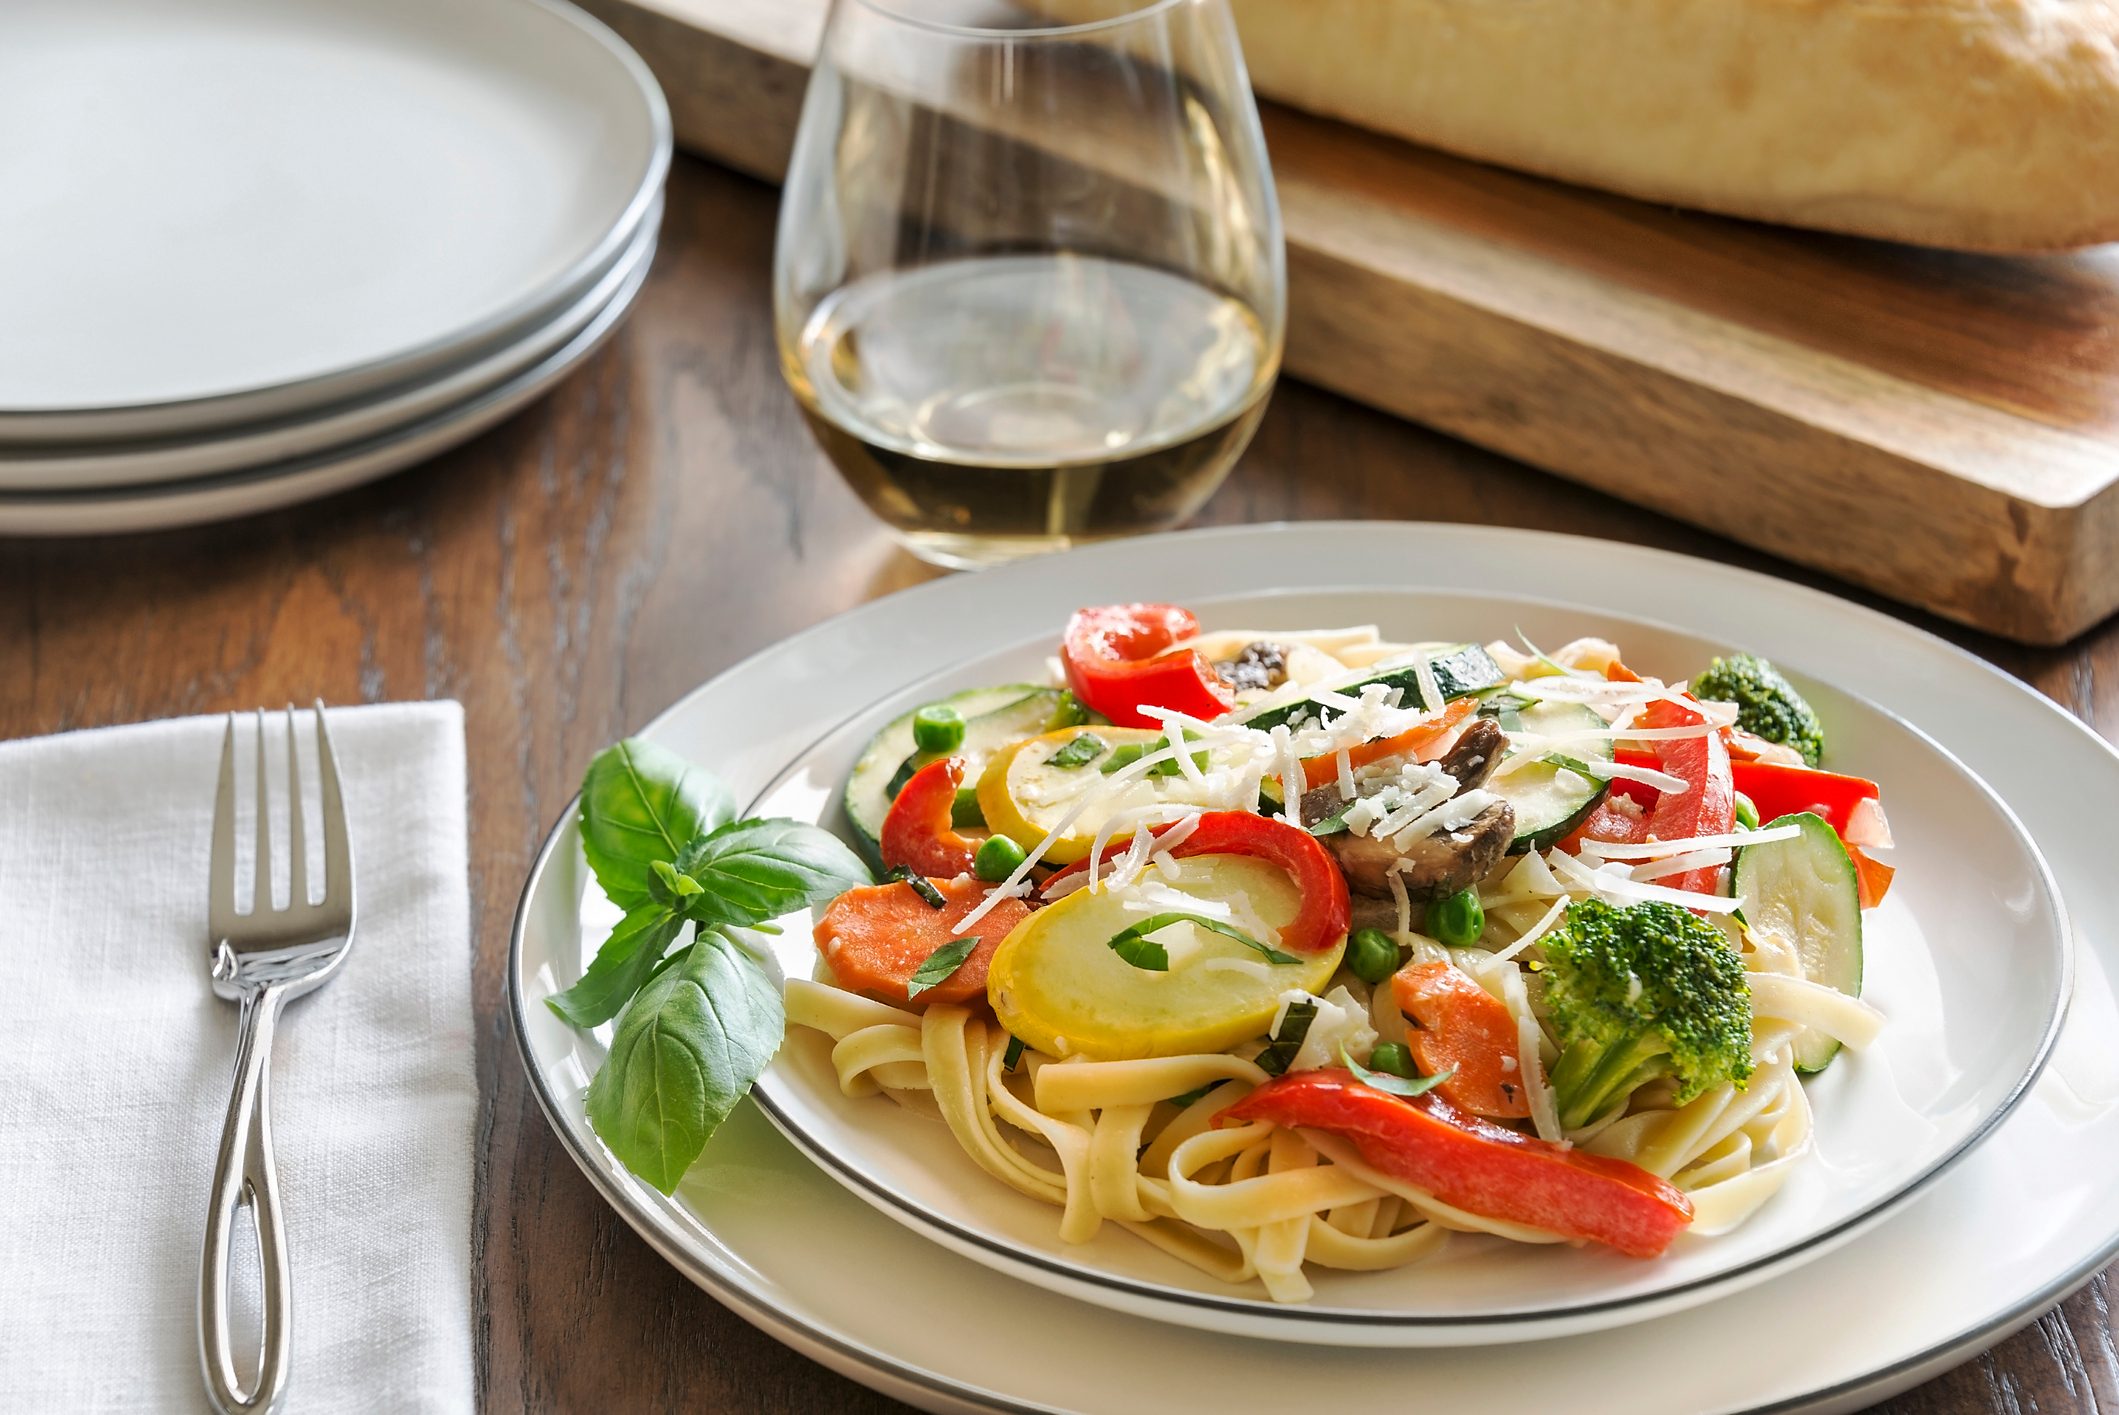 Pasta Primavera with fresh garden vegetables and pinot grigio white wine